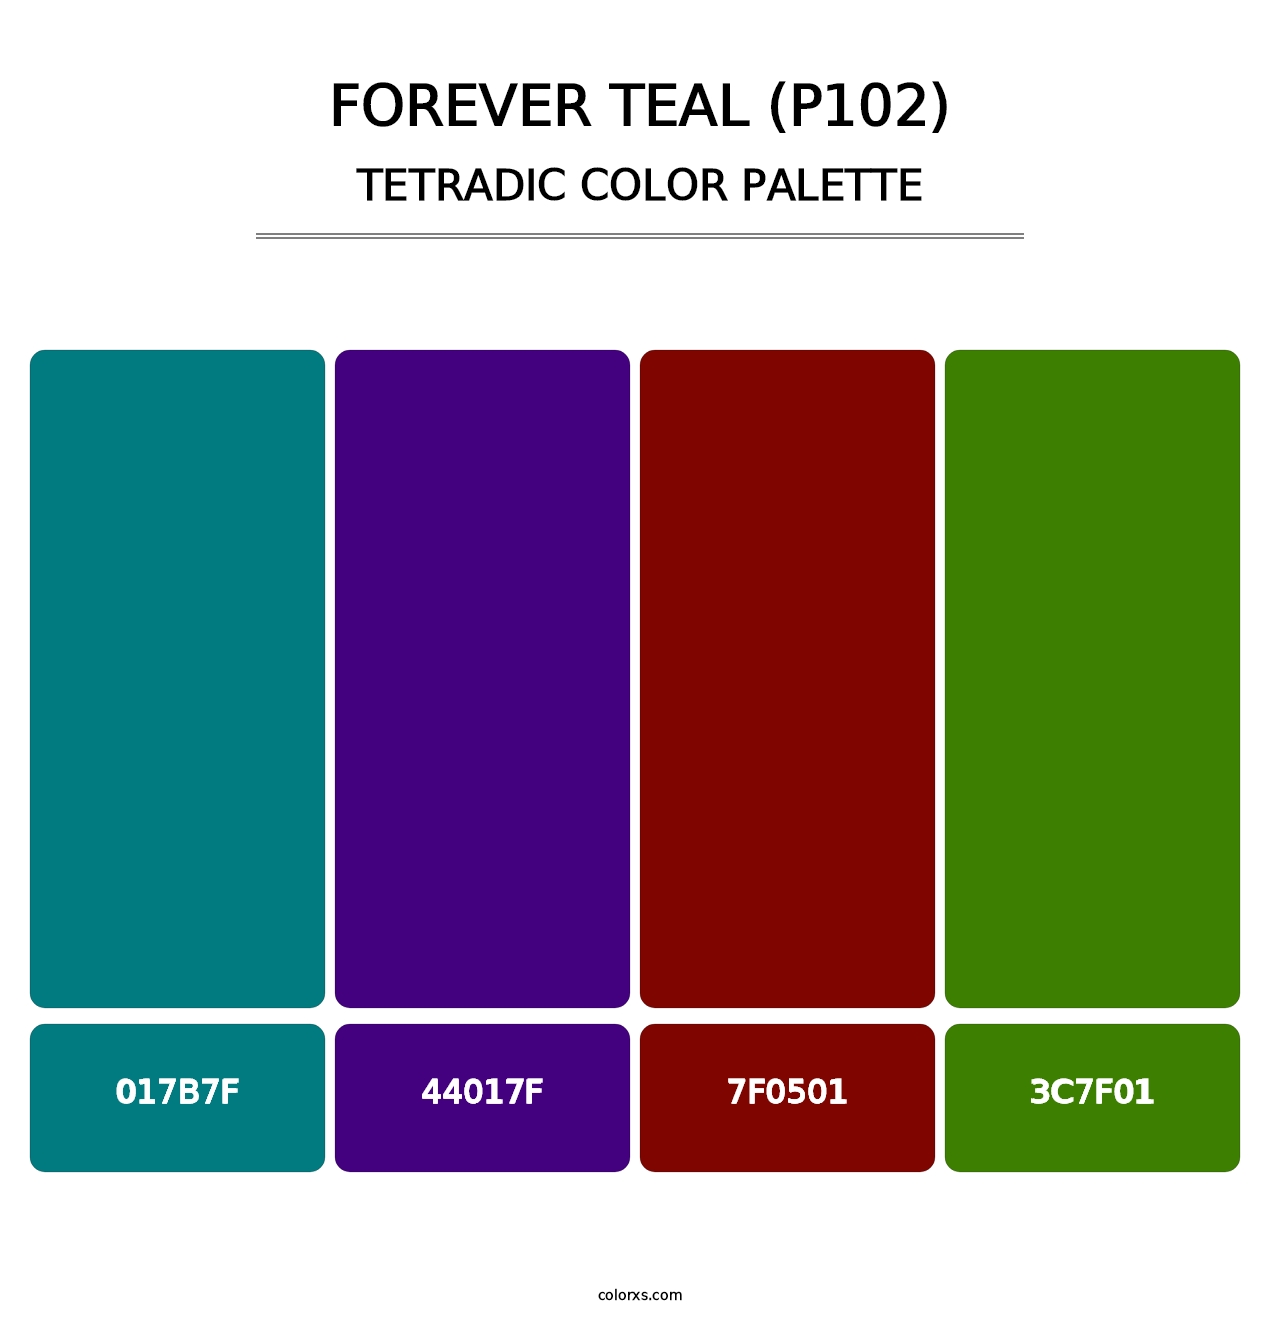 Forever Teal (P102) - Tetradic Color Palette